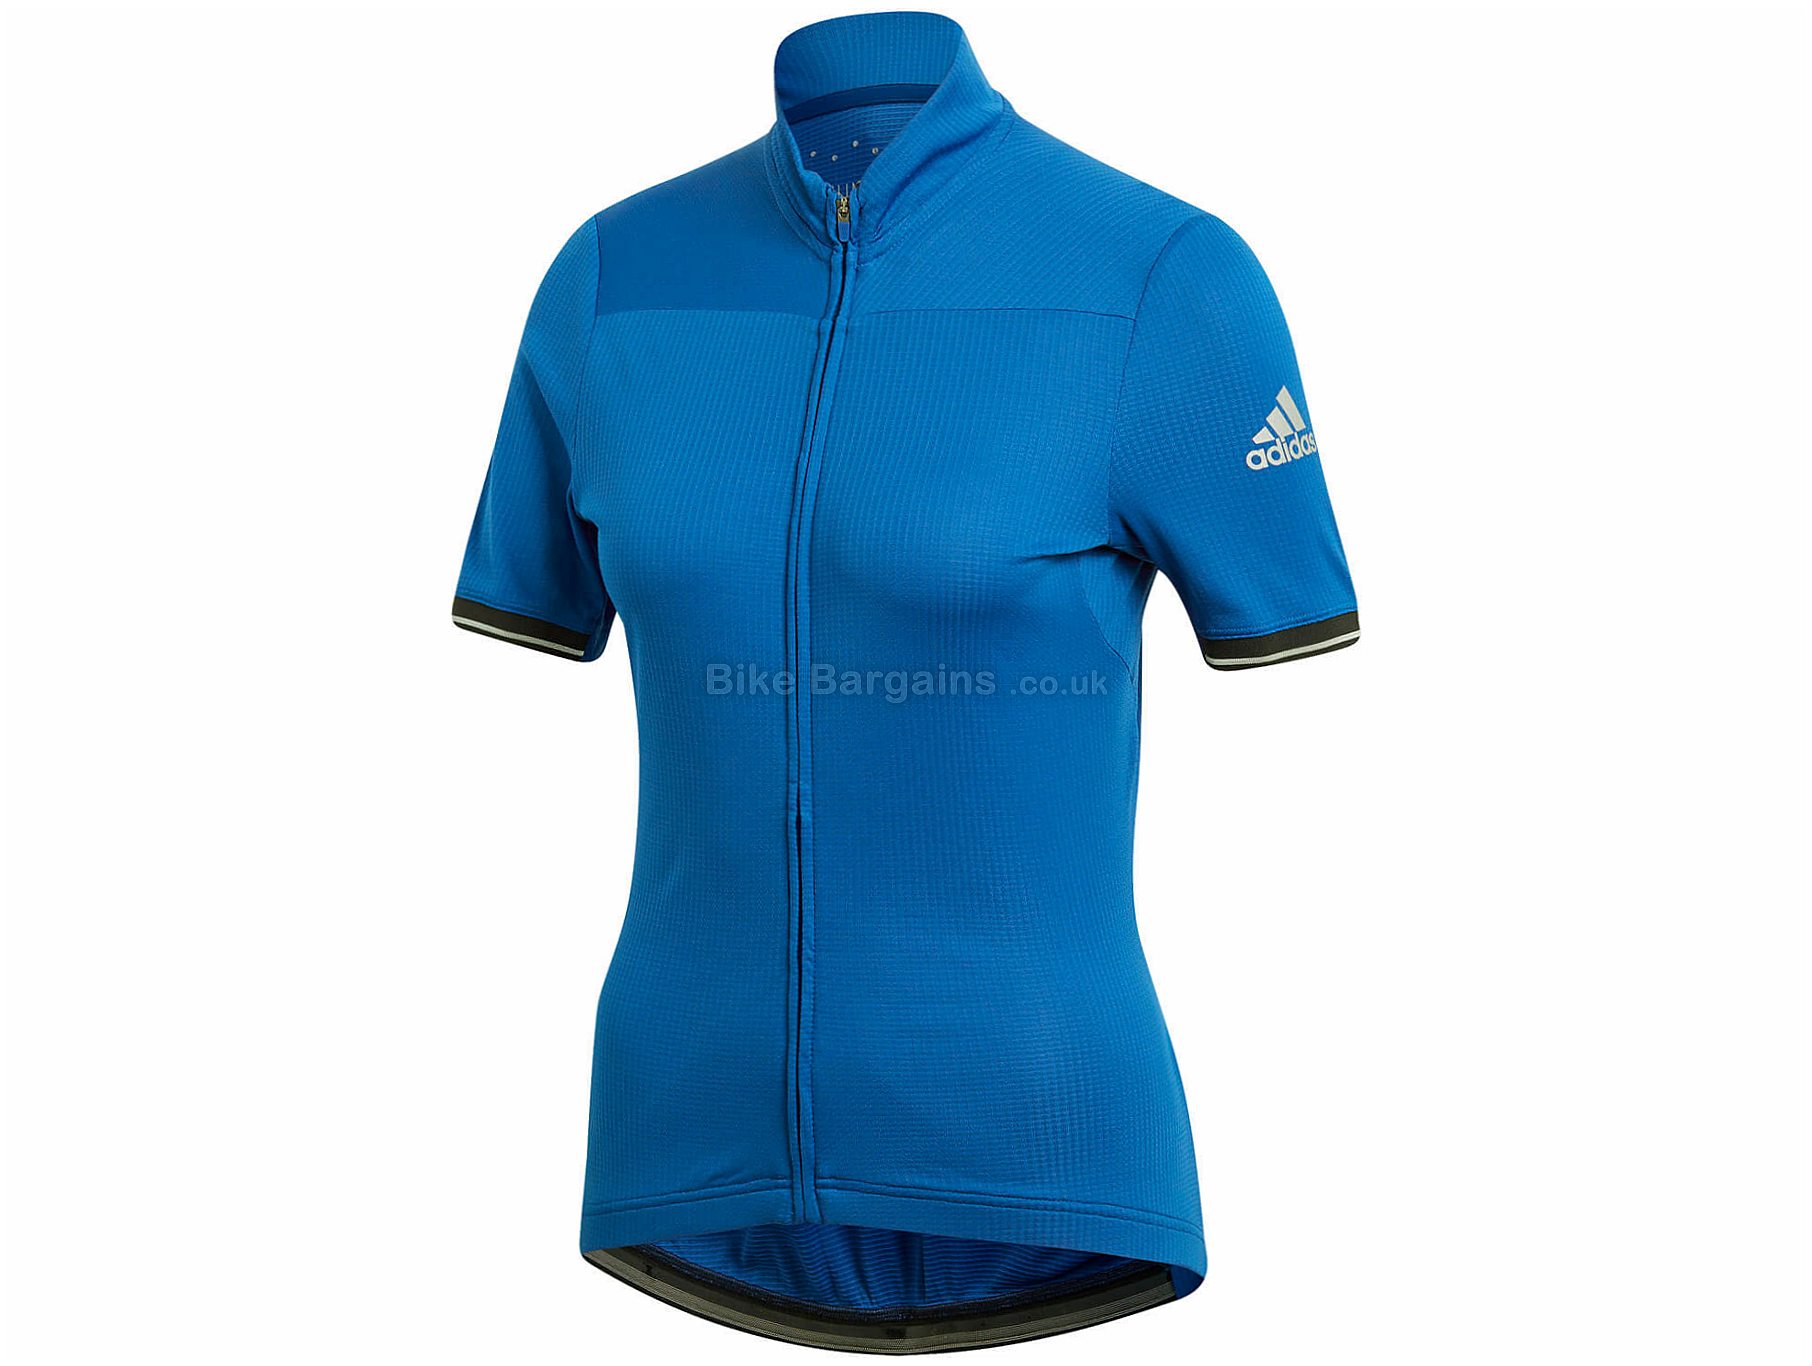 Adidas - Cycling clothing & other sportswear